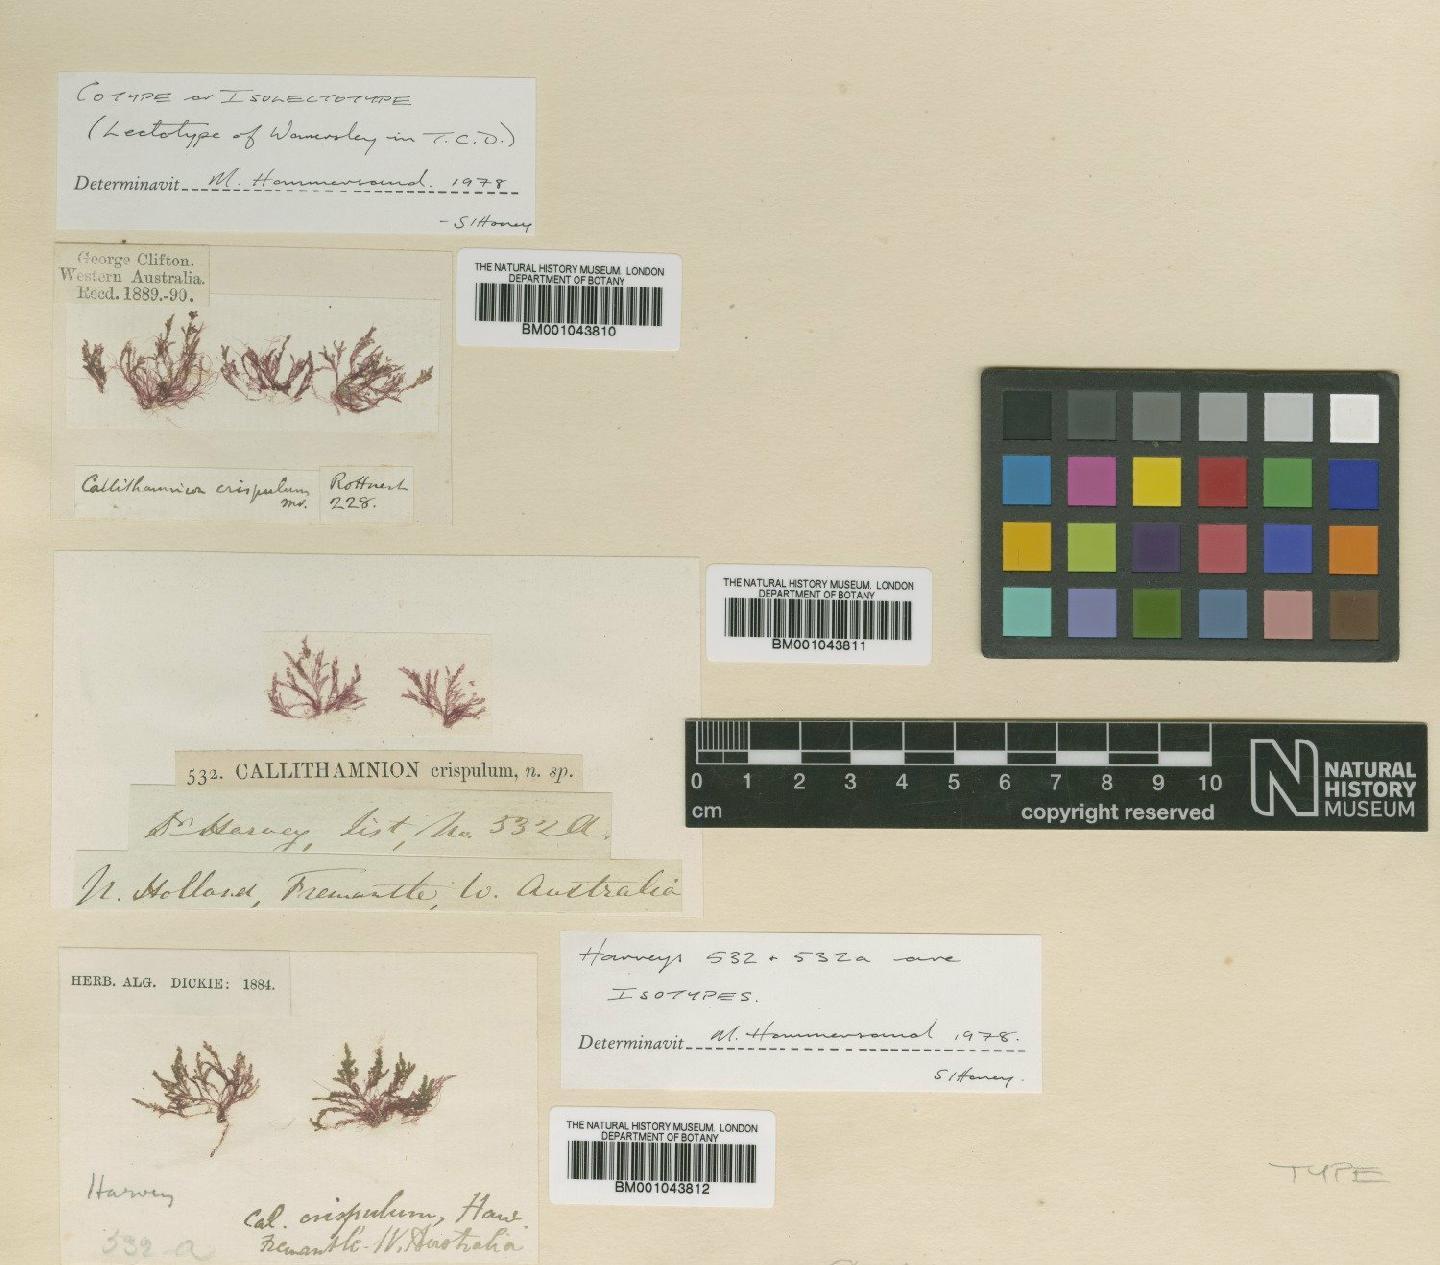 To NHMUK collection (Spongoclonium crispulum (Harv.) De Toni; Isolectotype; NHMUK:ecatalogue:2389356)